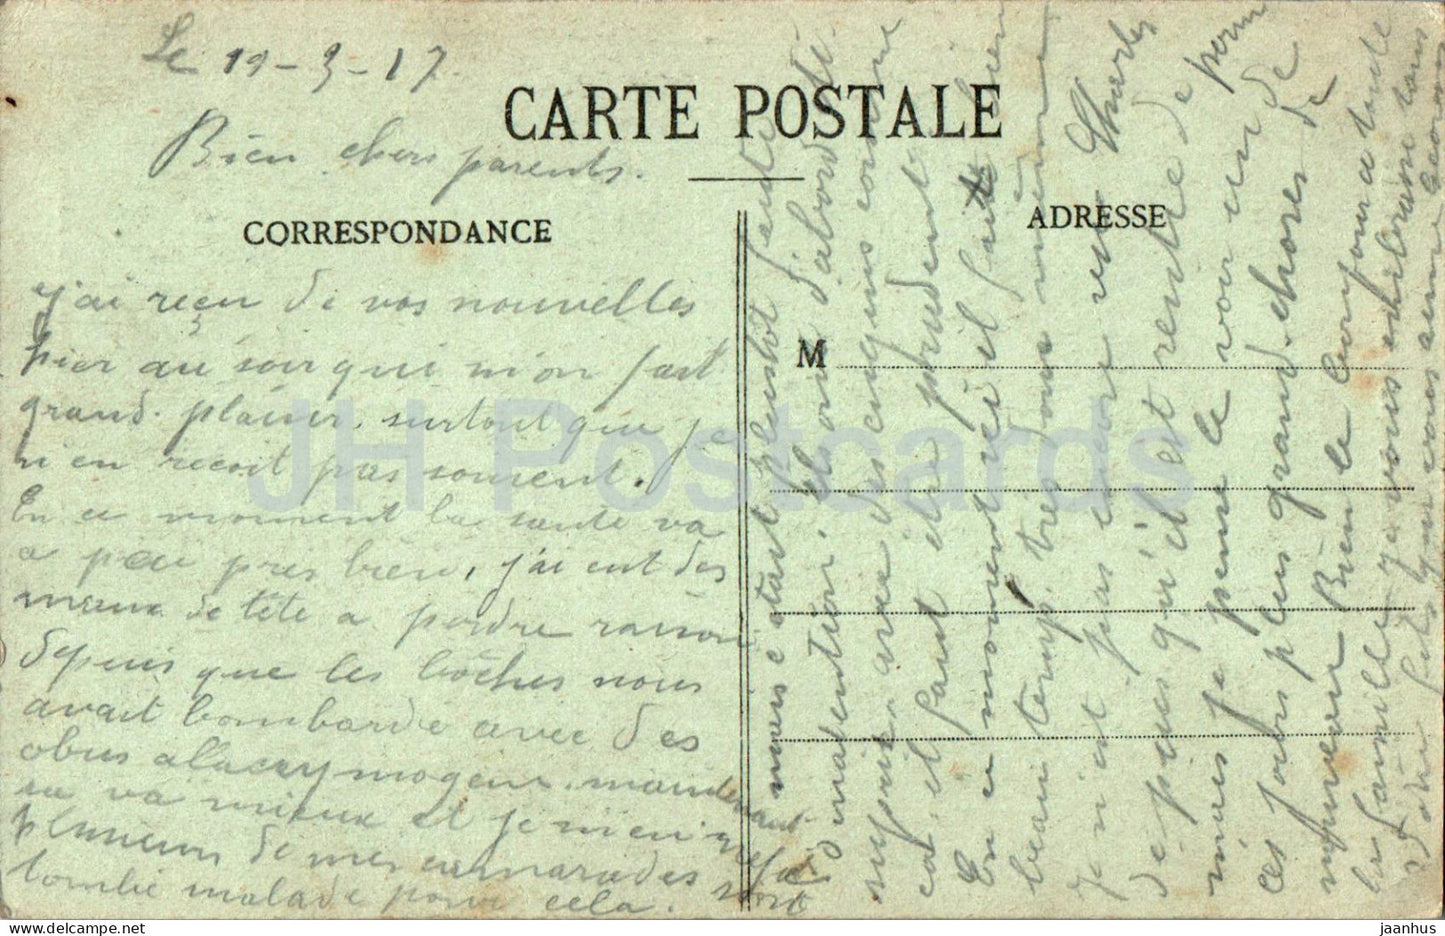 L'Argonne - Sainte Menehould - L'Eglise du Chateau - Flugzeug - l'avion - alte Postkarte - 1917 - Frankreich - gebraucht 